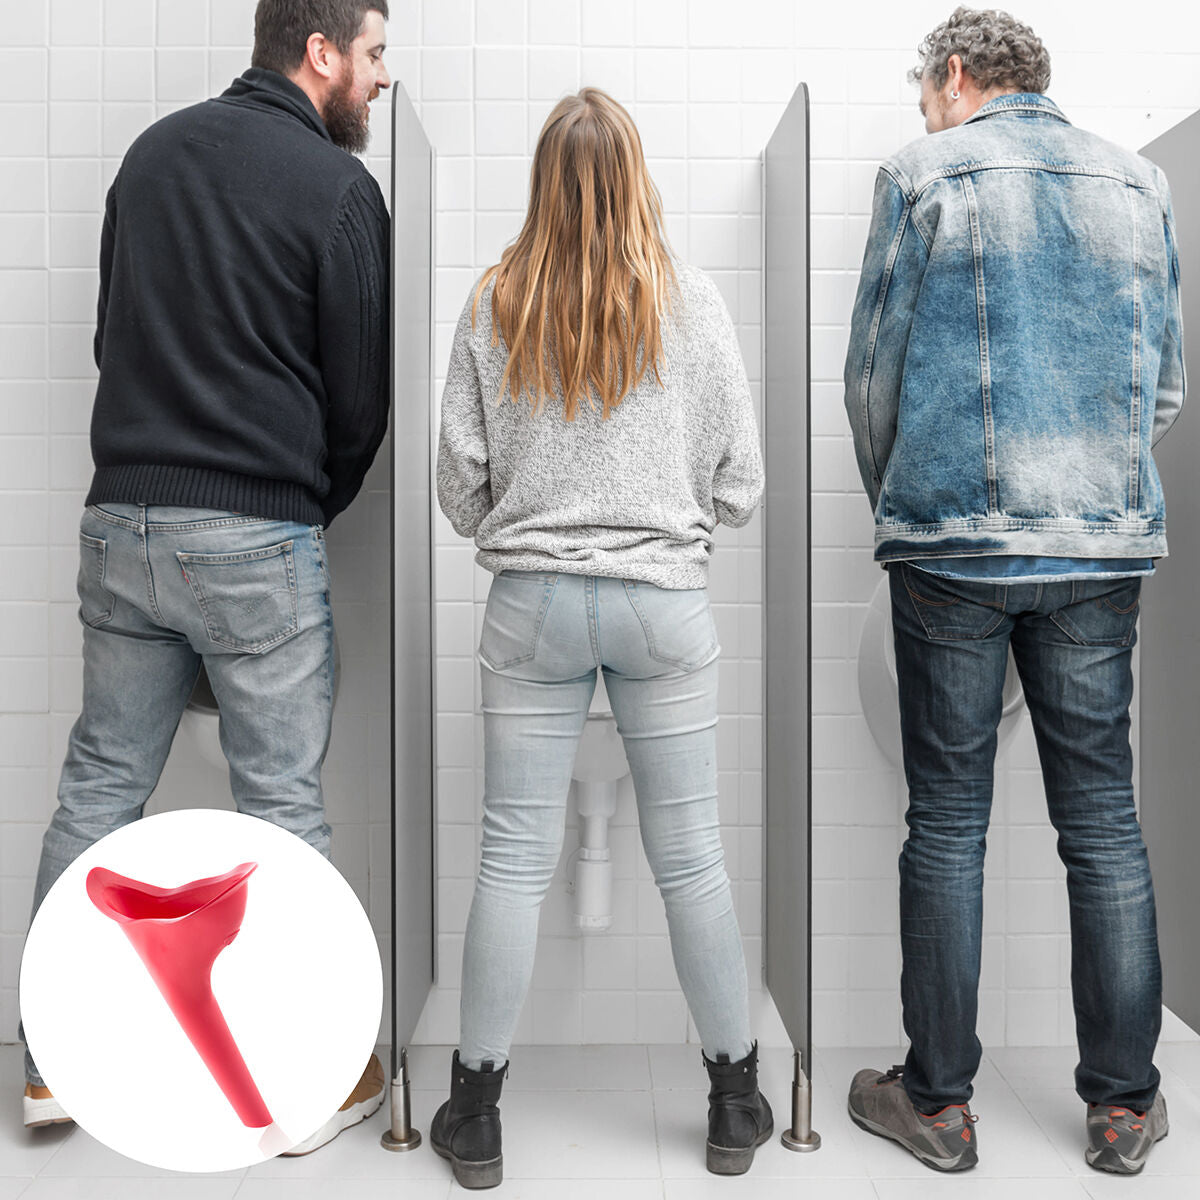 InnovaGoods Portable Female Urinal